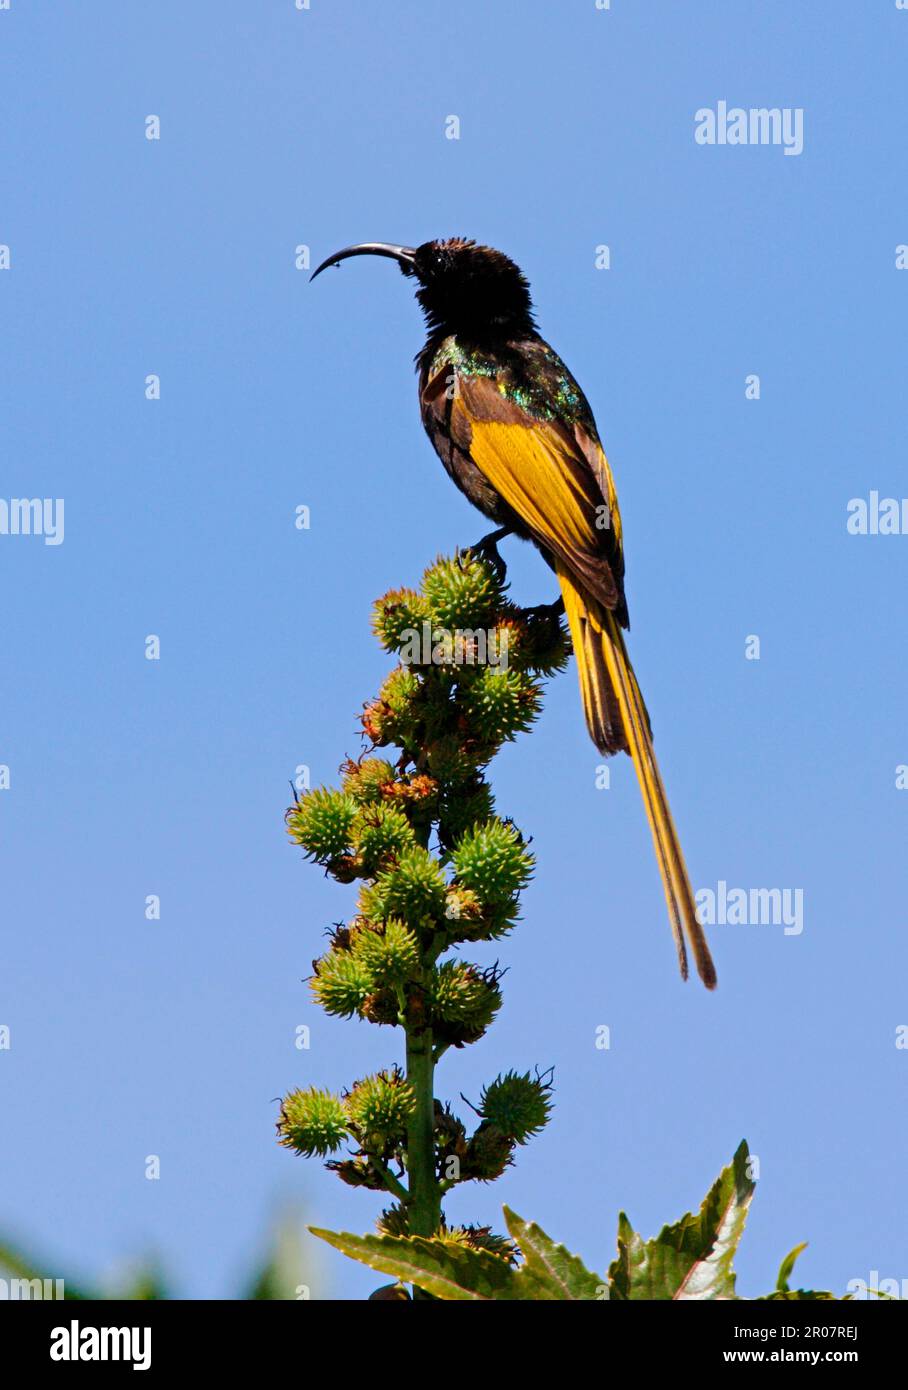 Golden-winged Sunbird, Golden-winged Sunbirds, nectar birds, songbirds, animals, birds, Golden-winged Sunbird (Nectarinia reichenowi) adult male Stock Photo